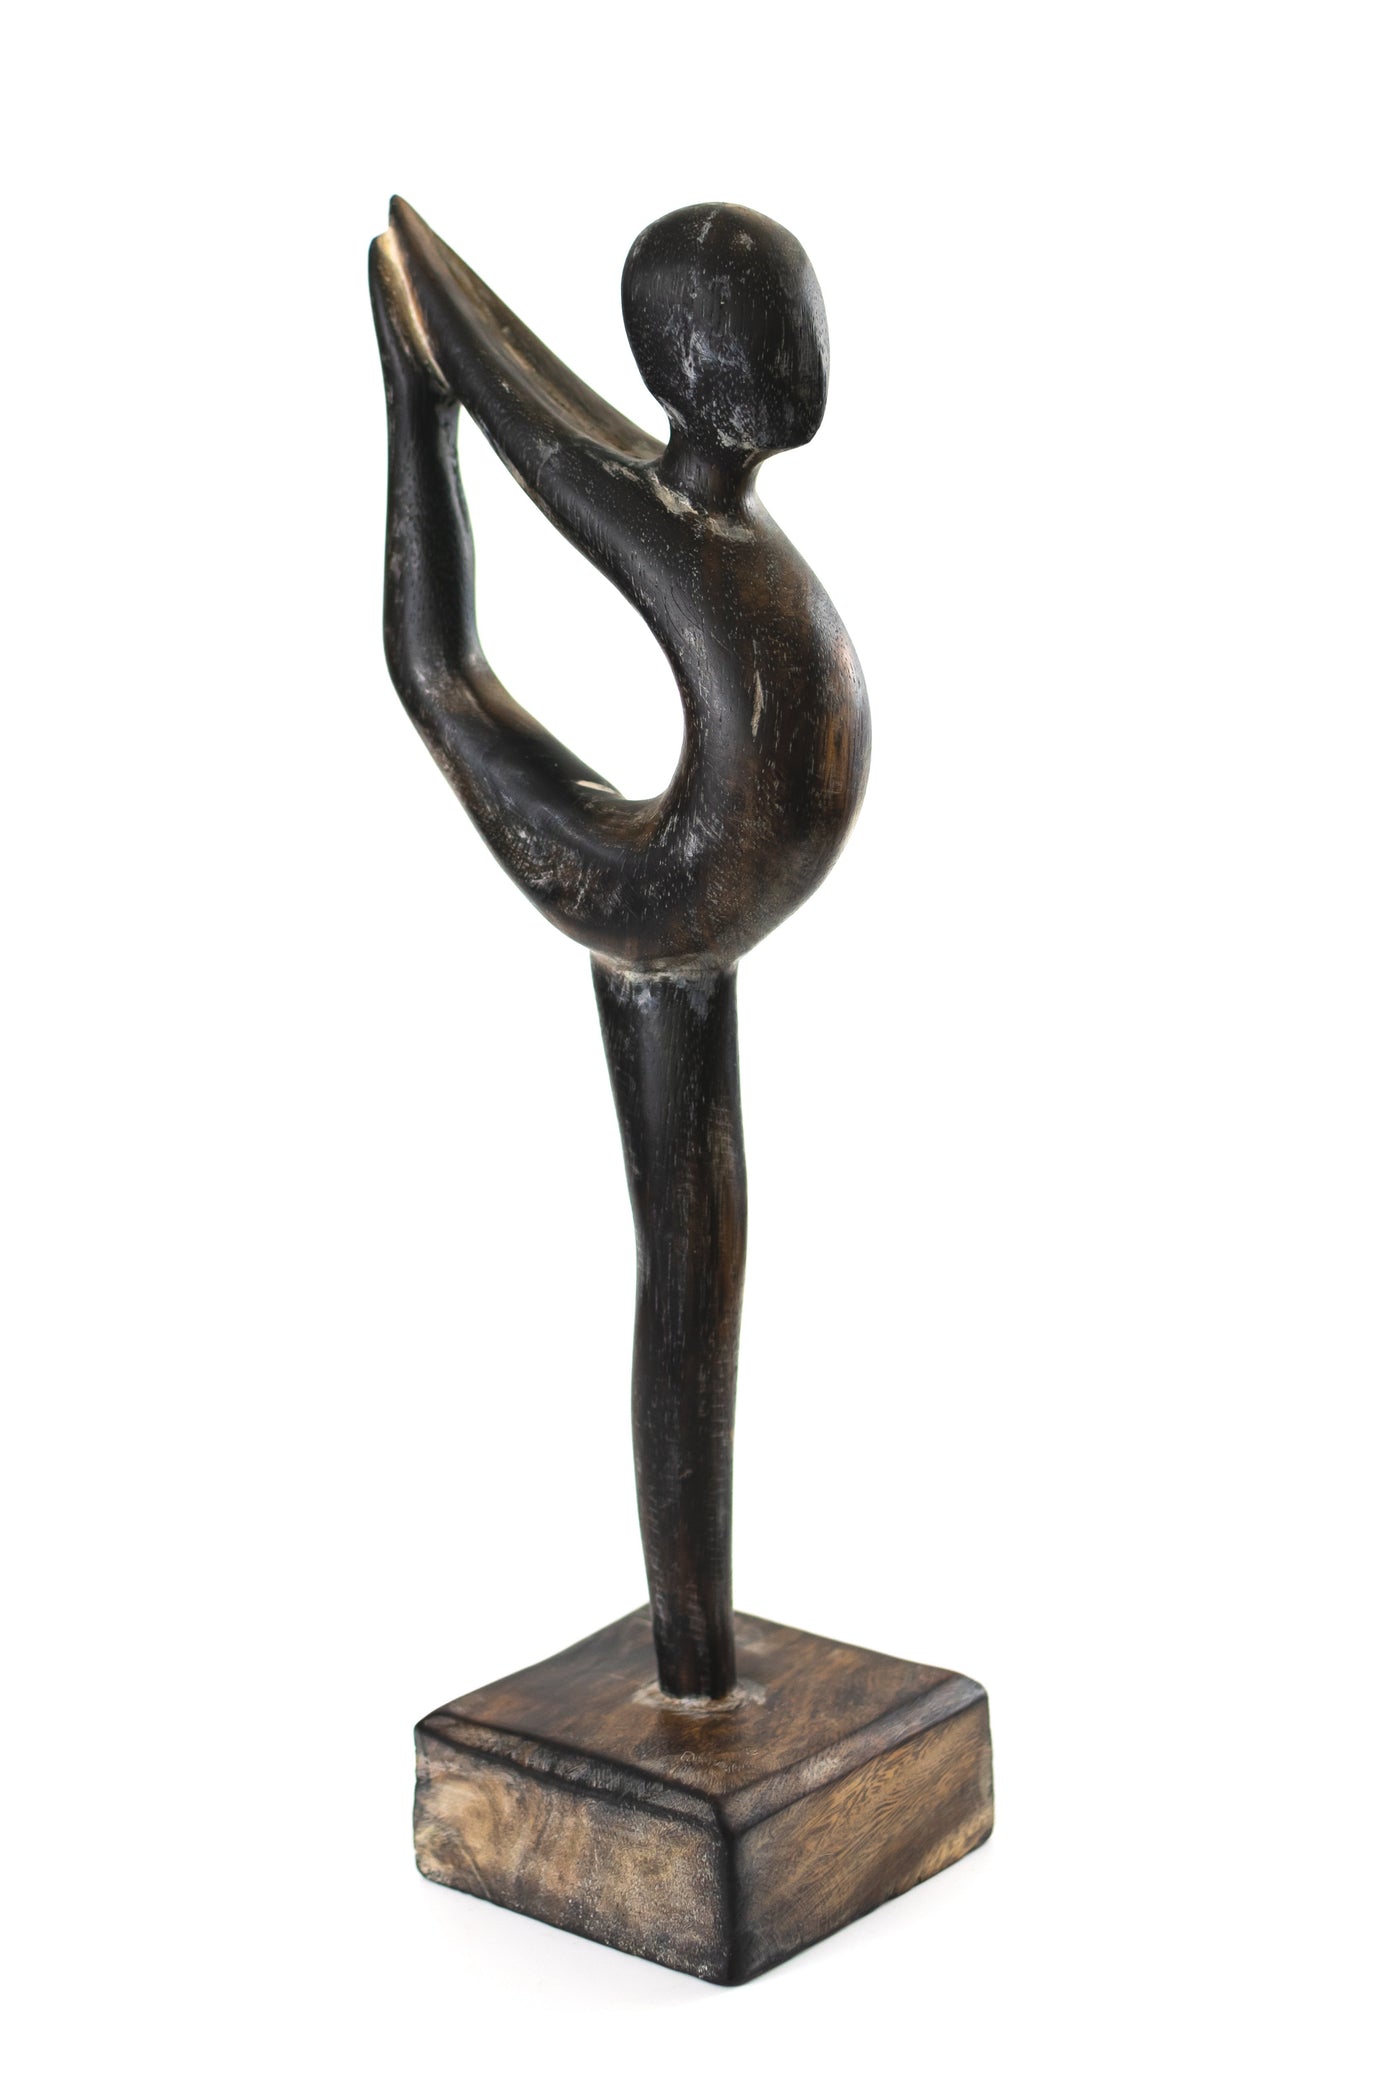 15" Wooden Handmade Abstract Ballet Dancer Sculpture Statue Handcrafted Gift Art Home Decor Figurine Accent Hand Carved Ballerina Attitude Dèrriere